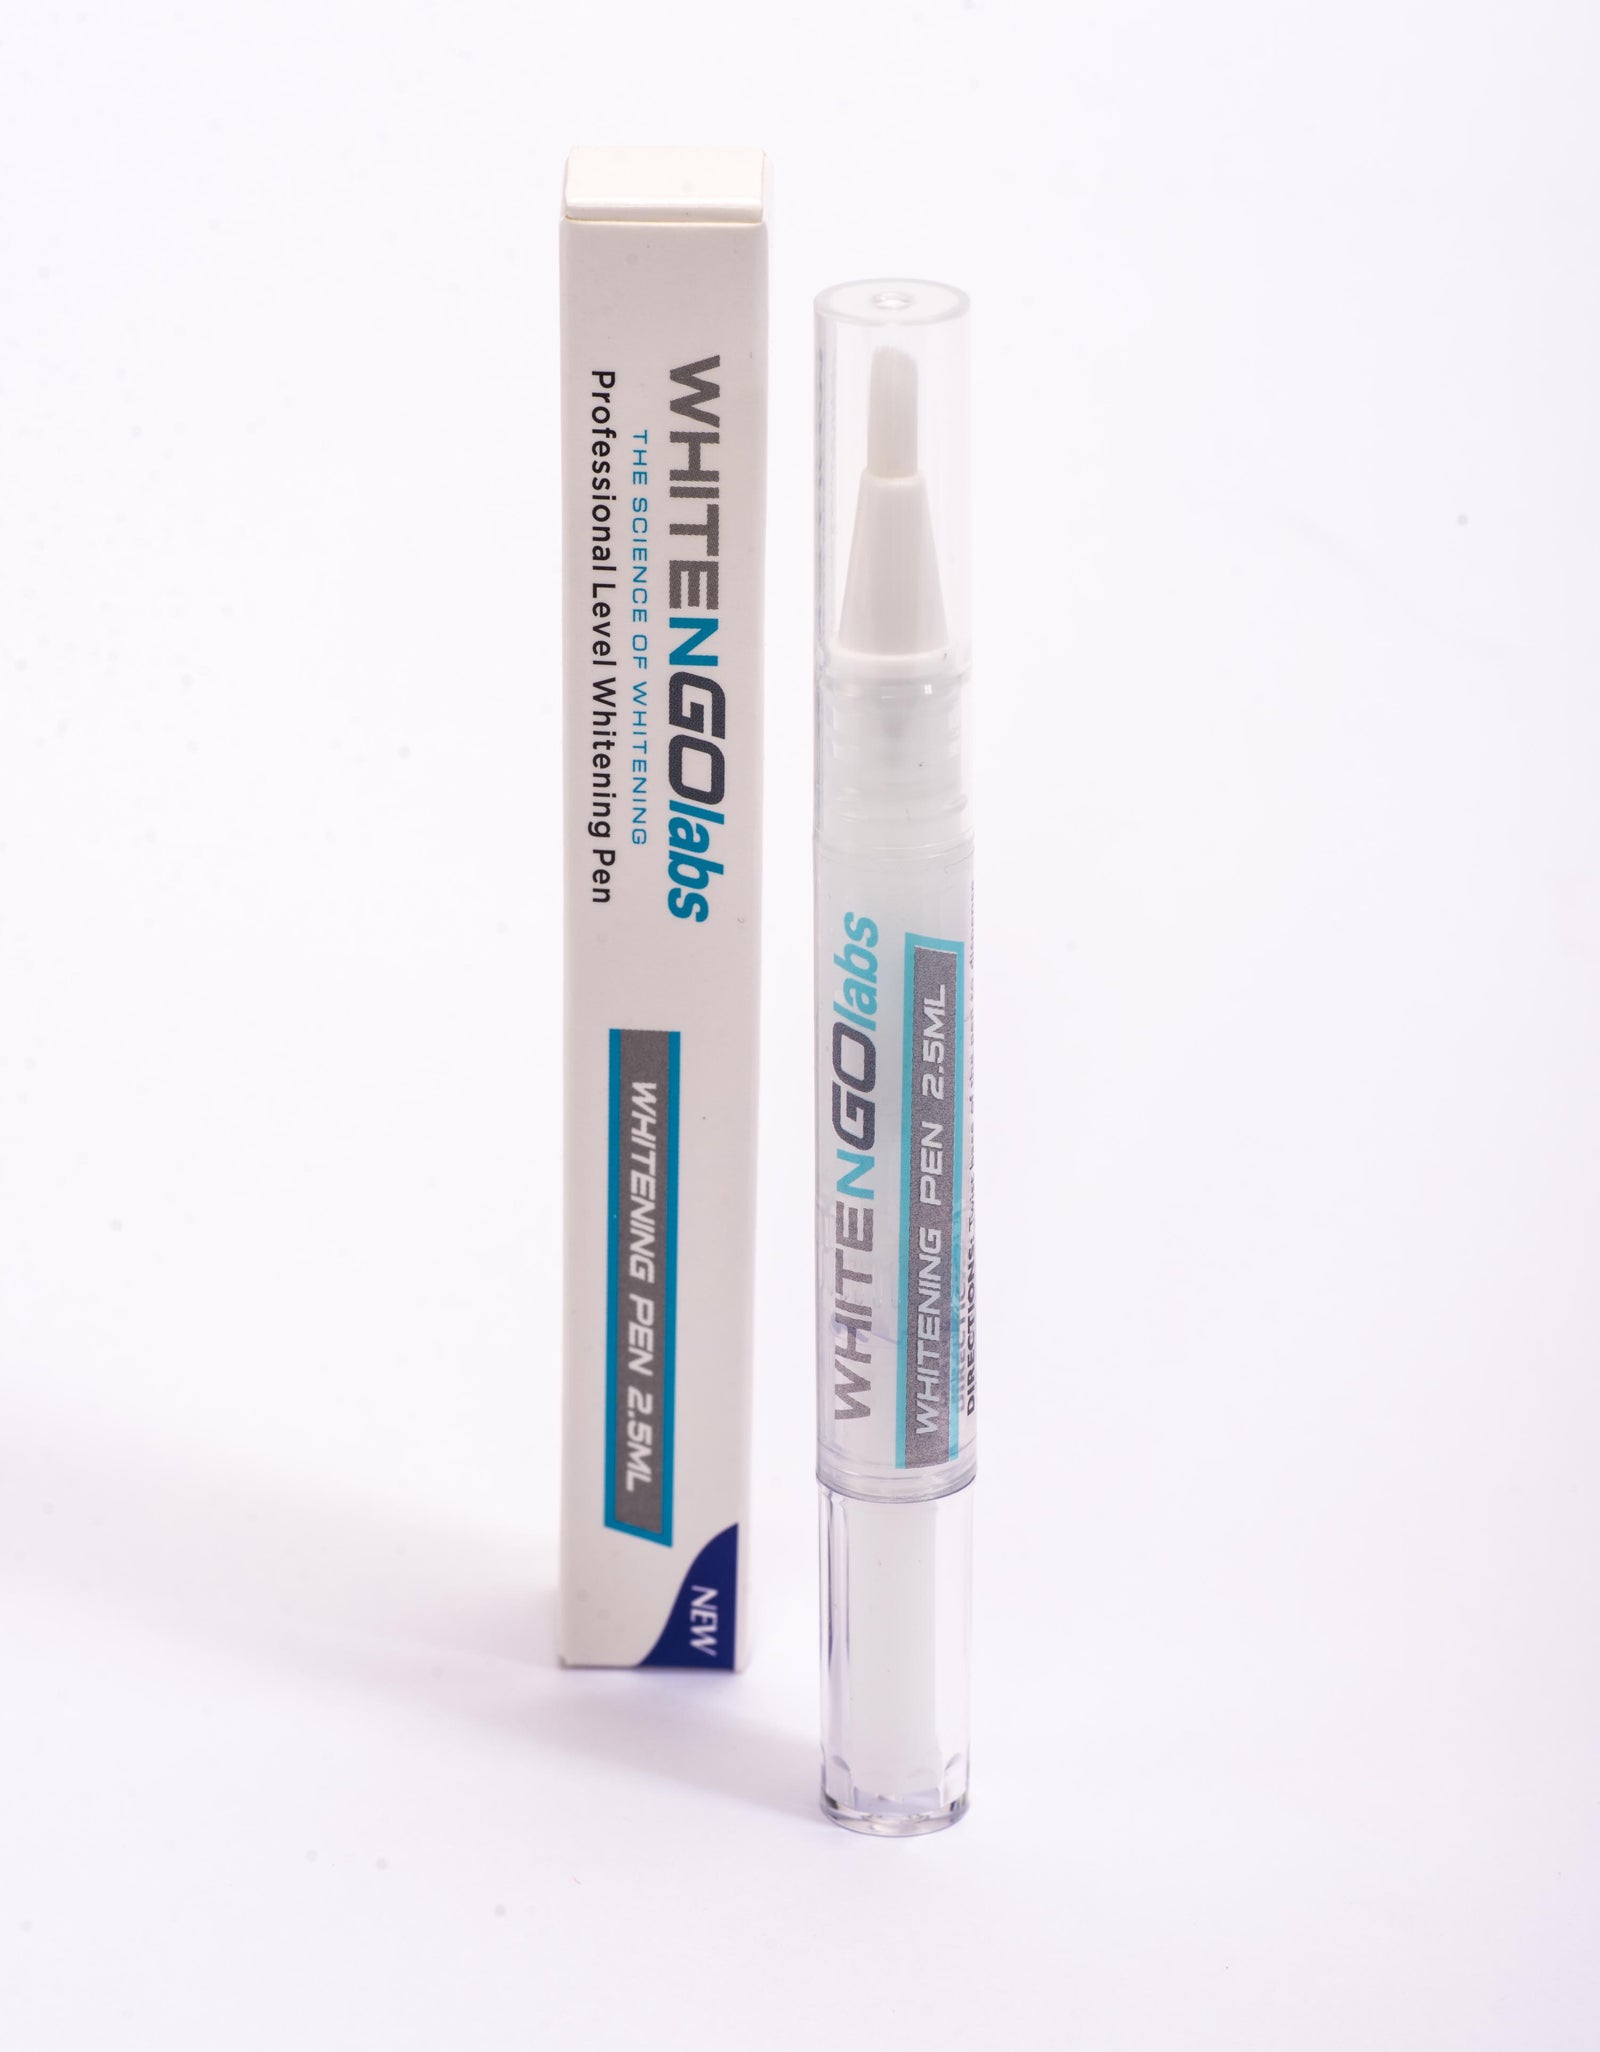 Teeth Whitening Pen & Teeth Whitening Strips Bundle